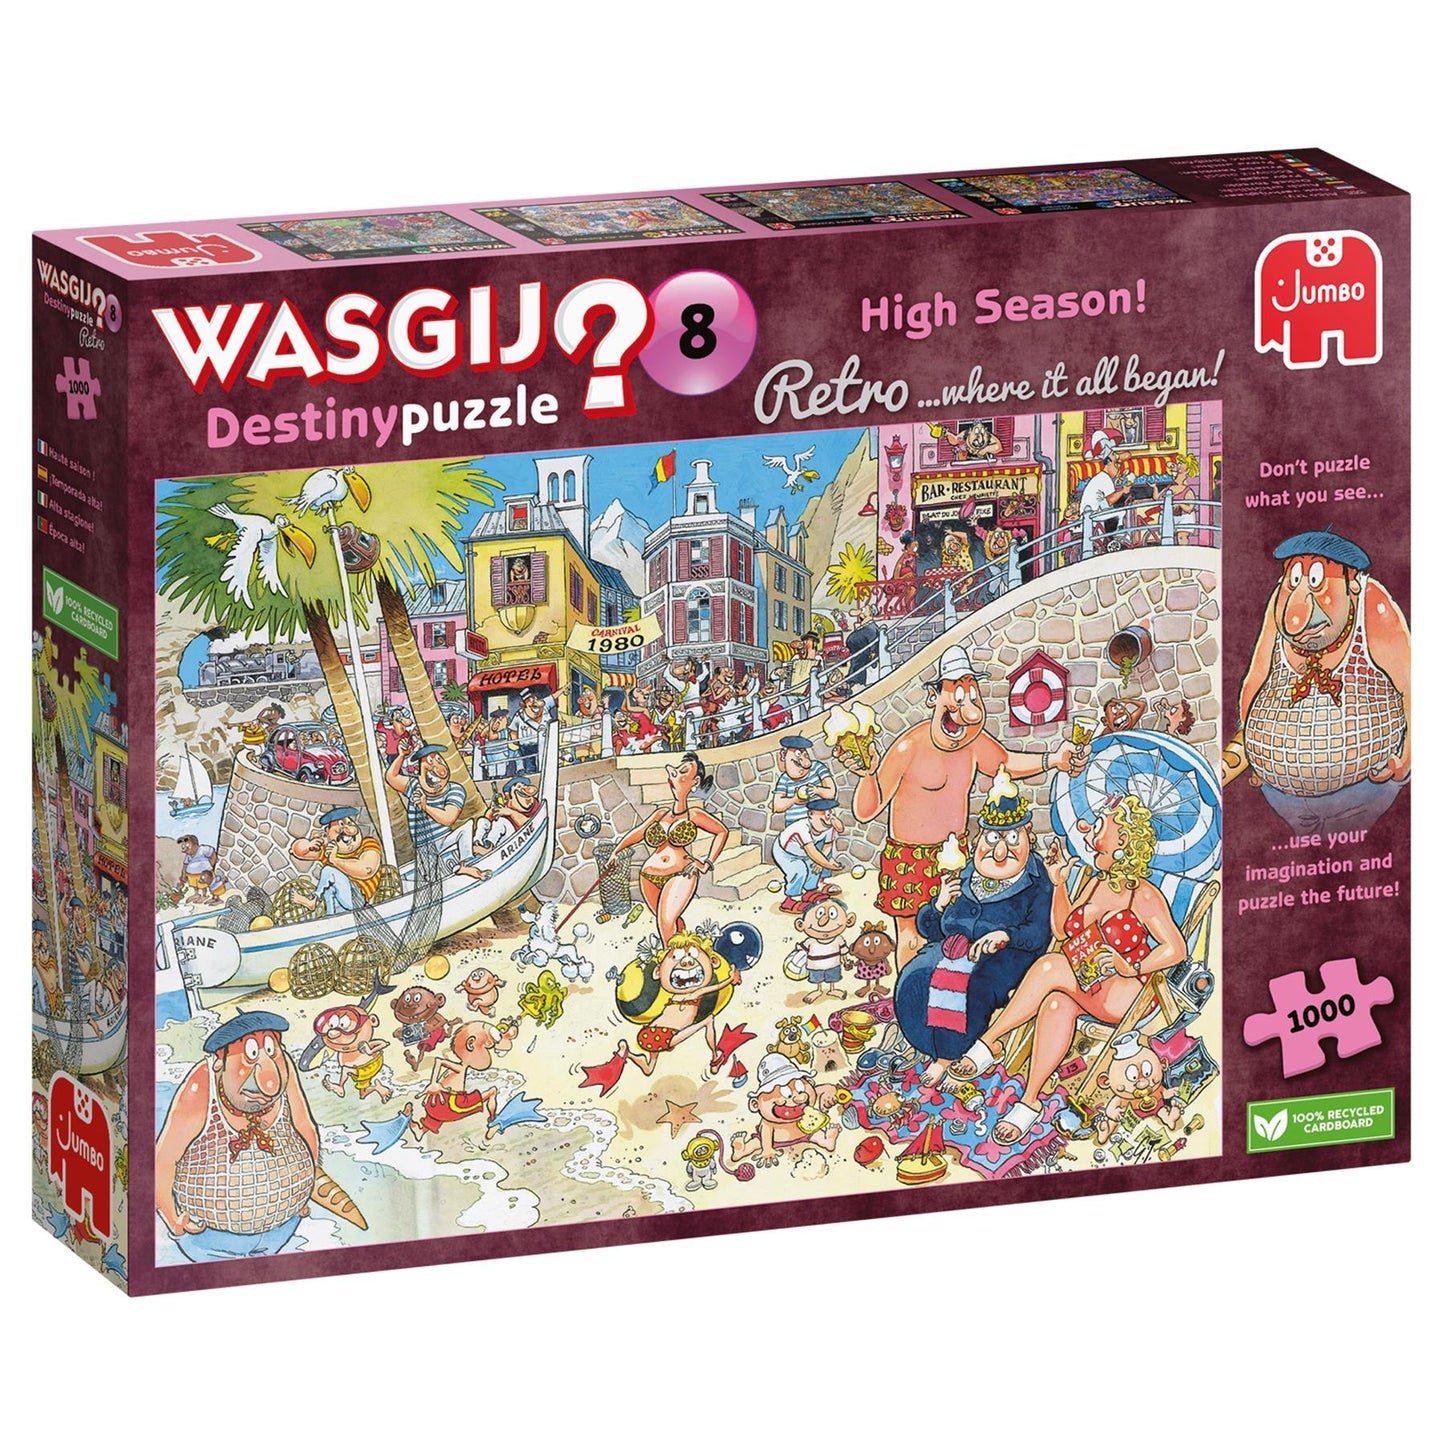 Wasgij Retro Destiny 8 High Season!  1000 Piece Jigsaw Puzzle